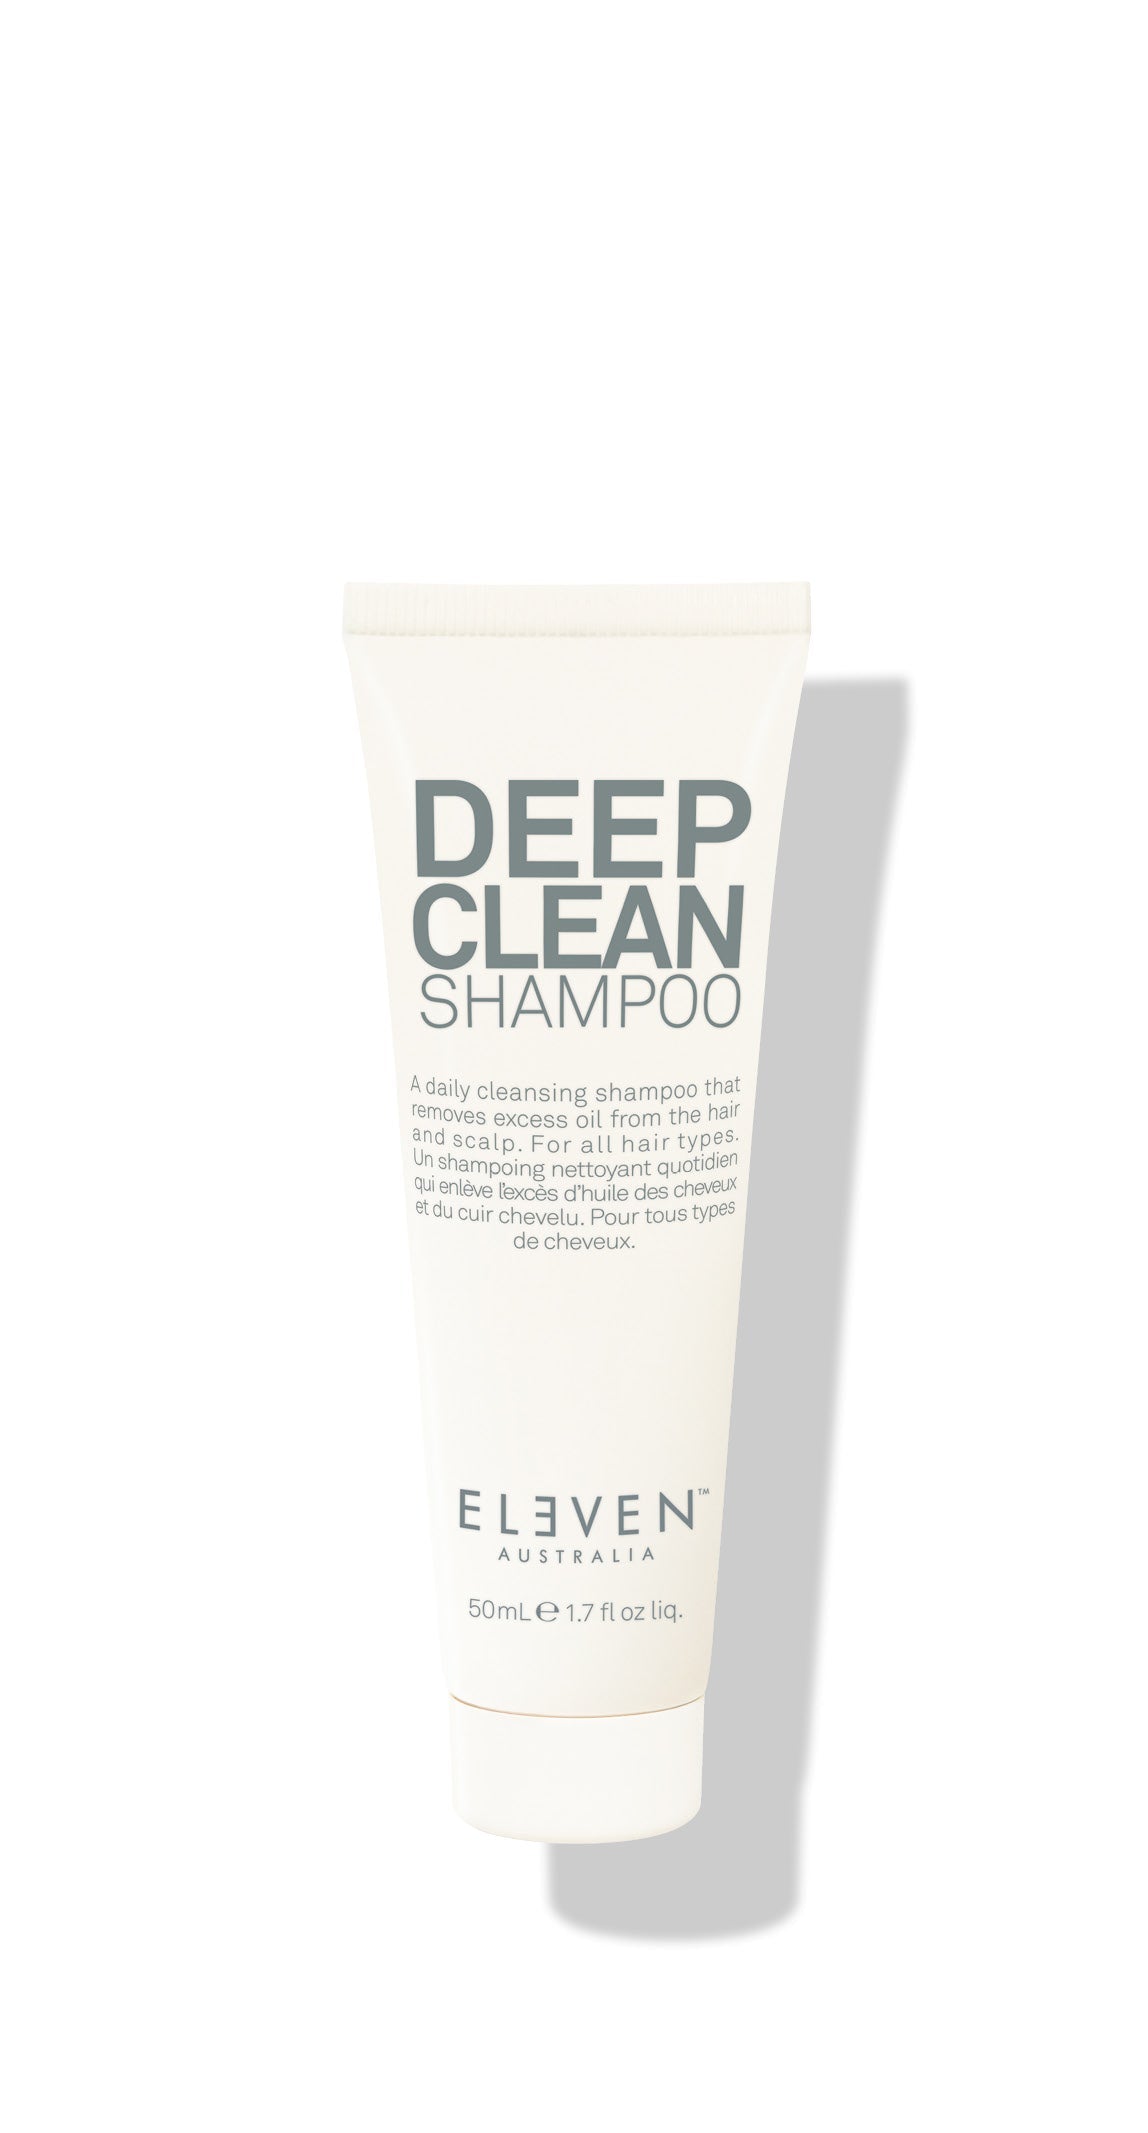 Deep Clean Shampoo - 50ml - ELEVEN Australia